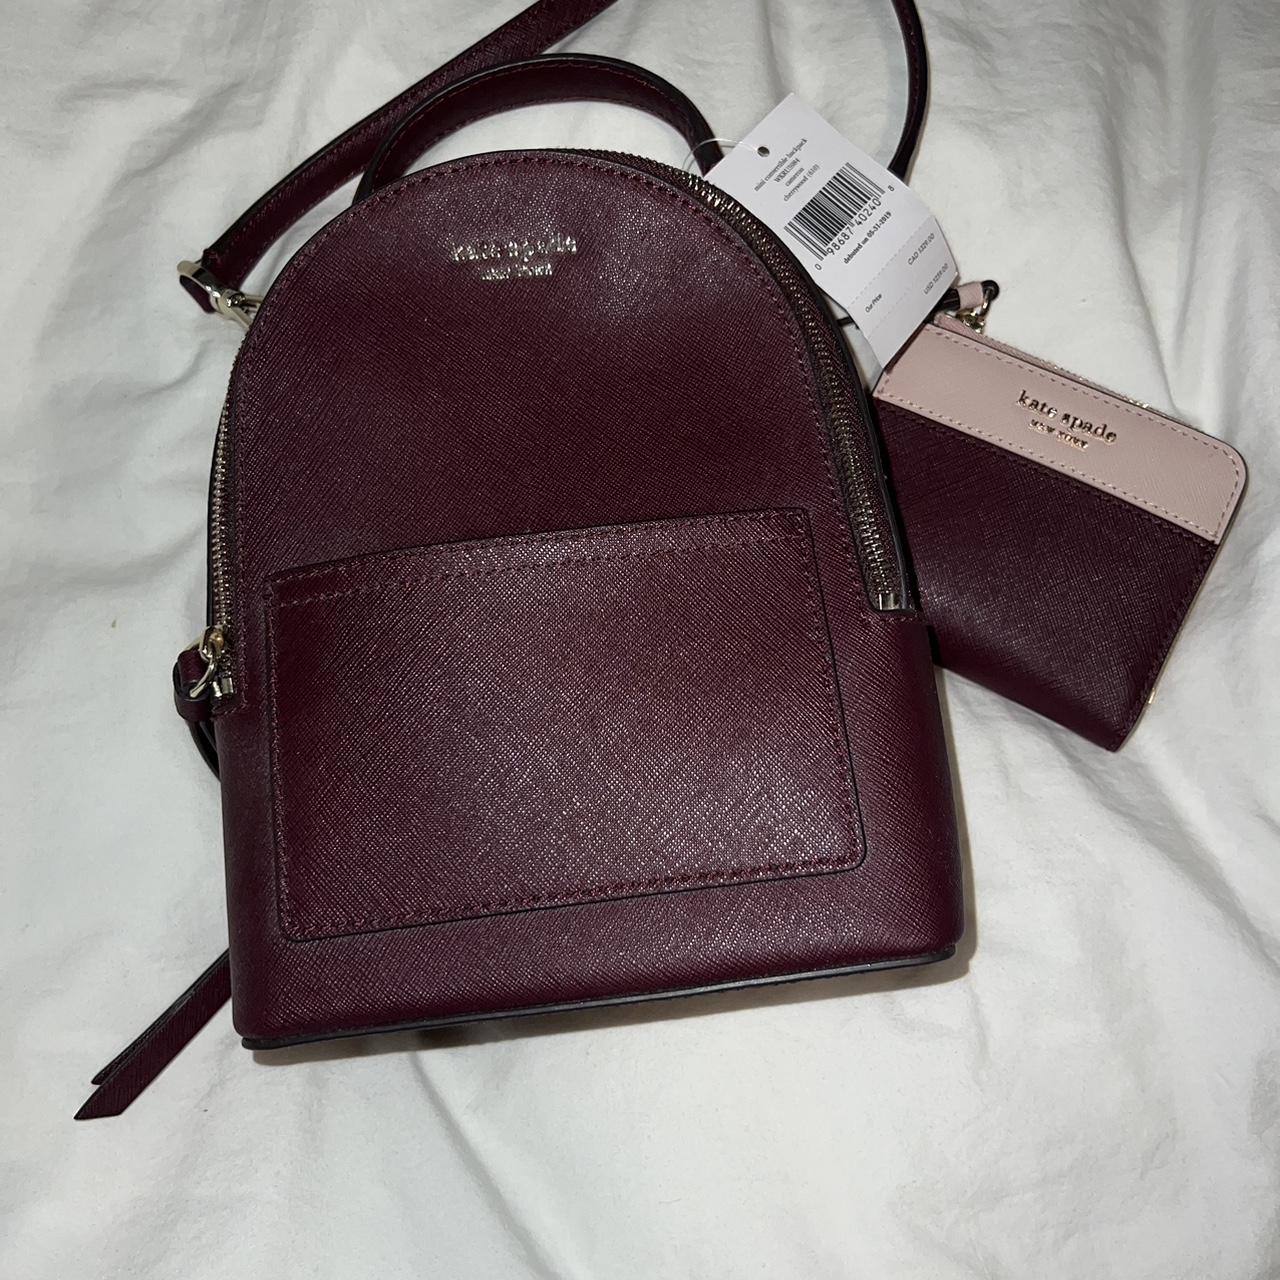 Kate spade crossbody bag and matching wallet - Depop